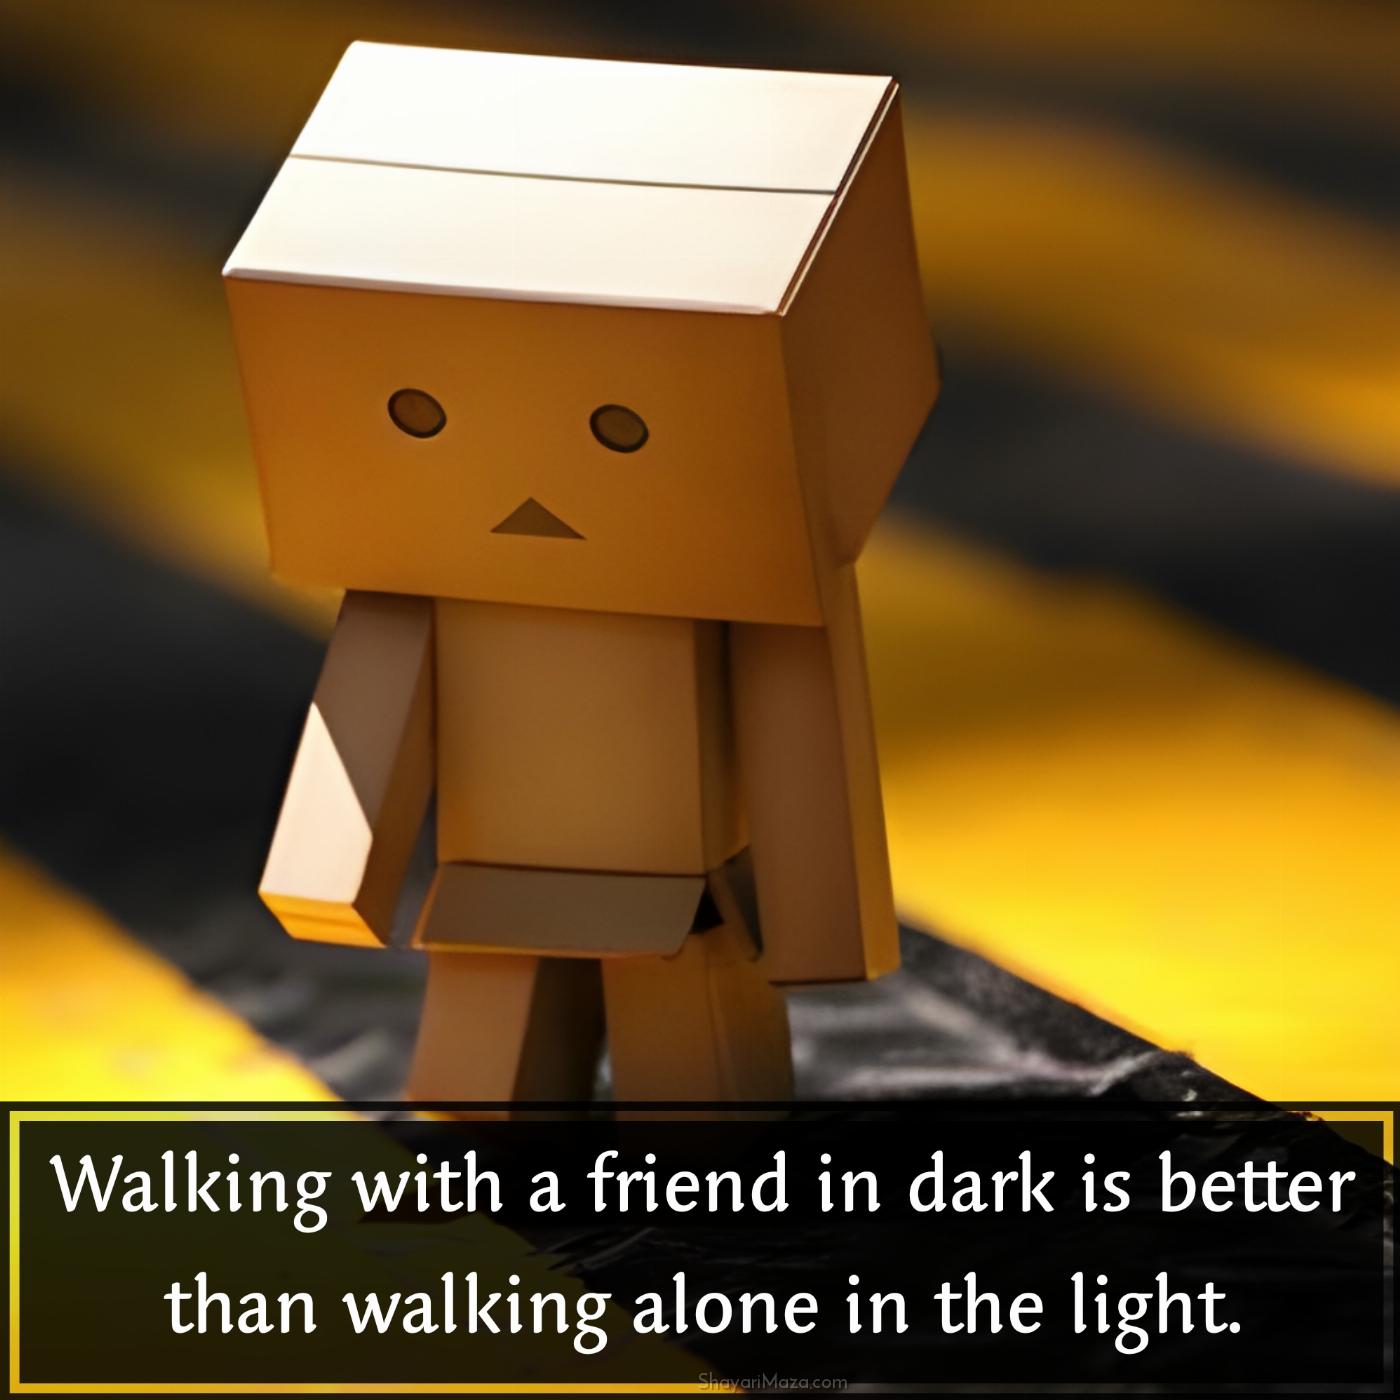 Walking with a friend in dark is better than walking alone